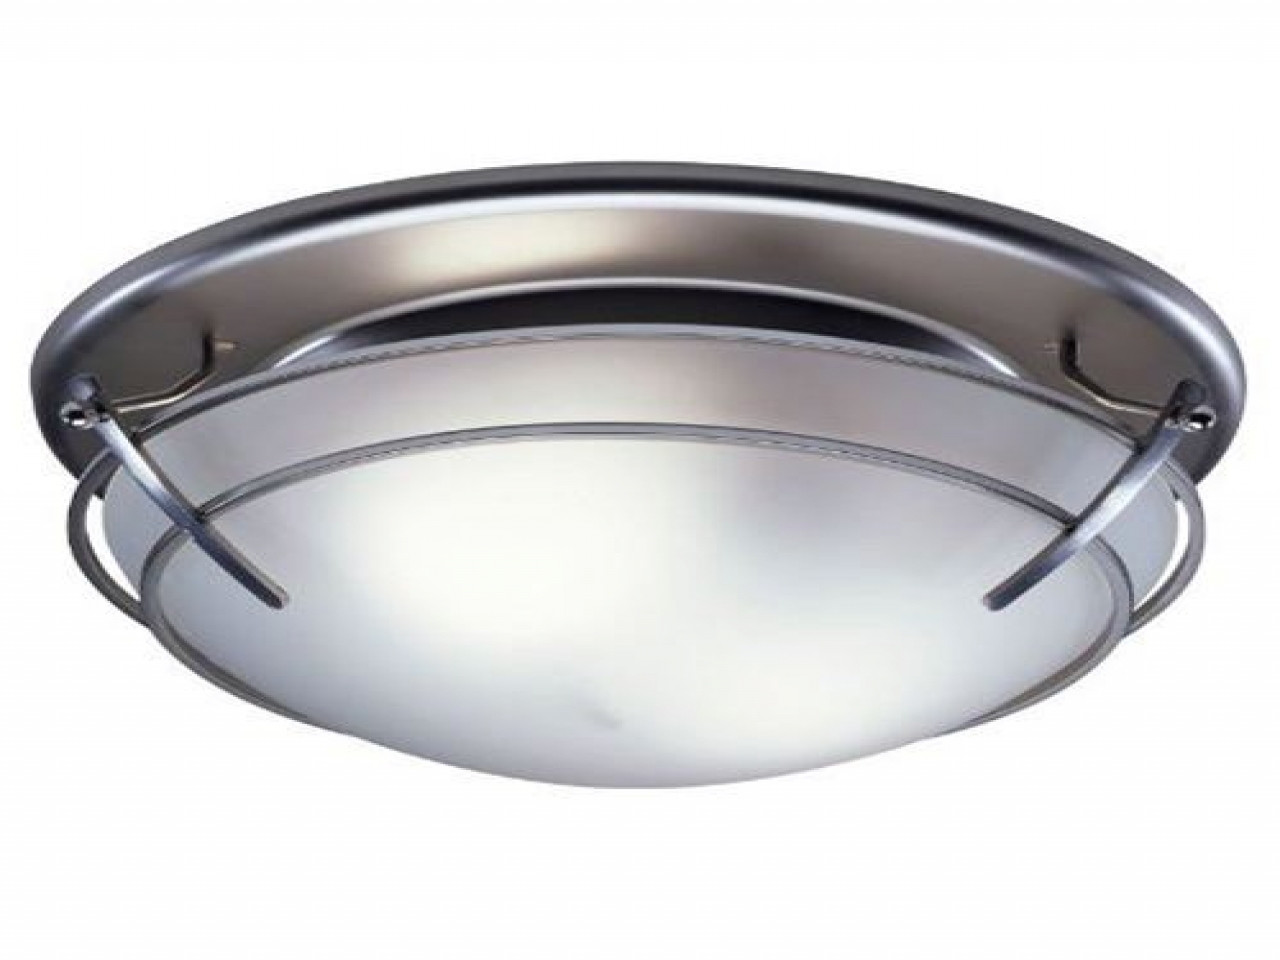 Bathroom Exhaust Fan Light Combo
 Ceiling fans lowes decorative bathroom fans with light